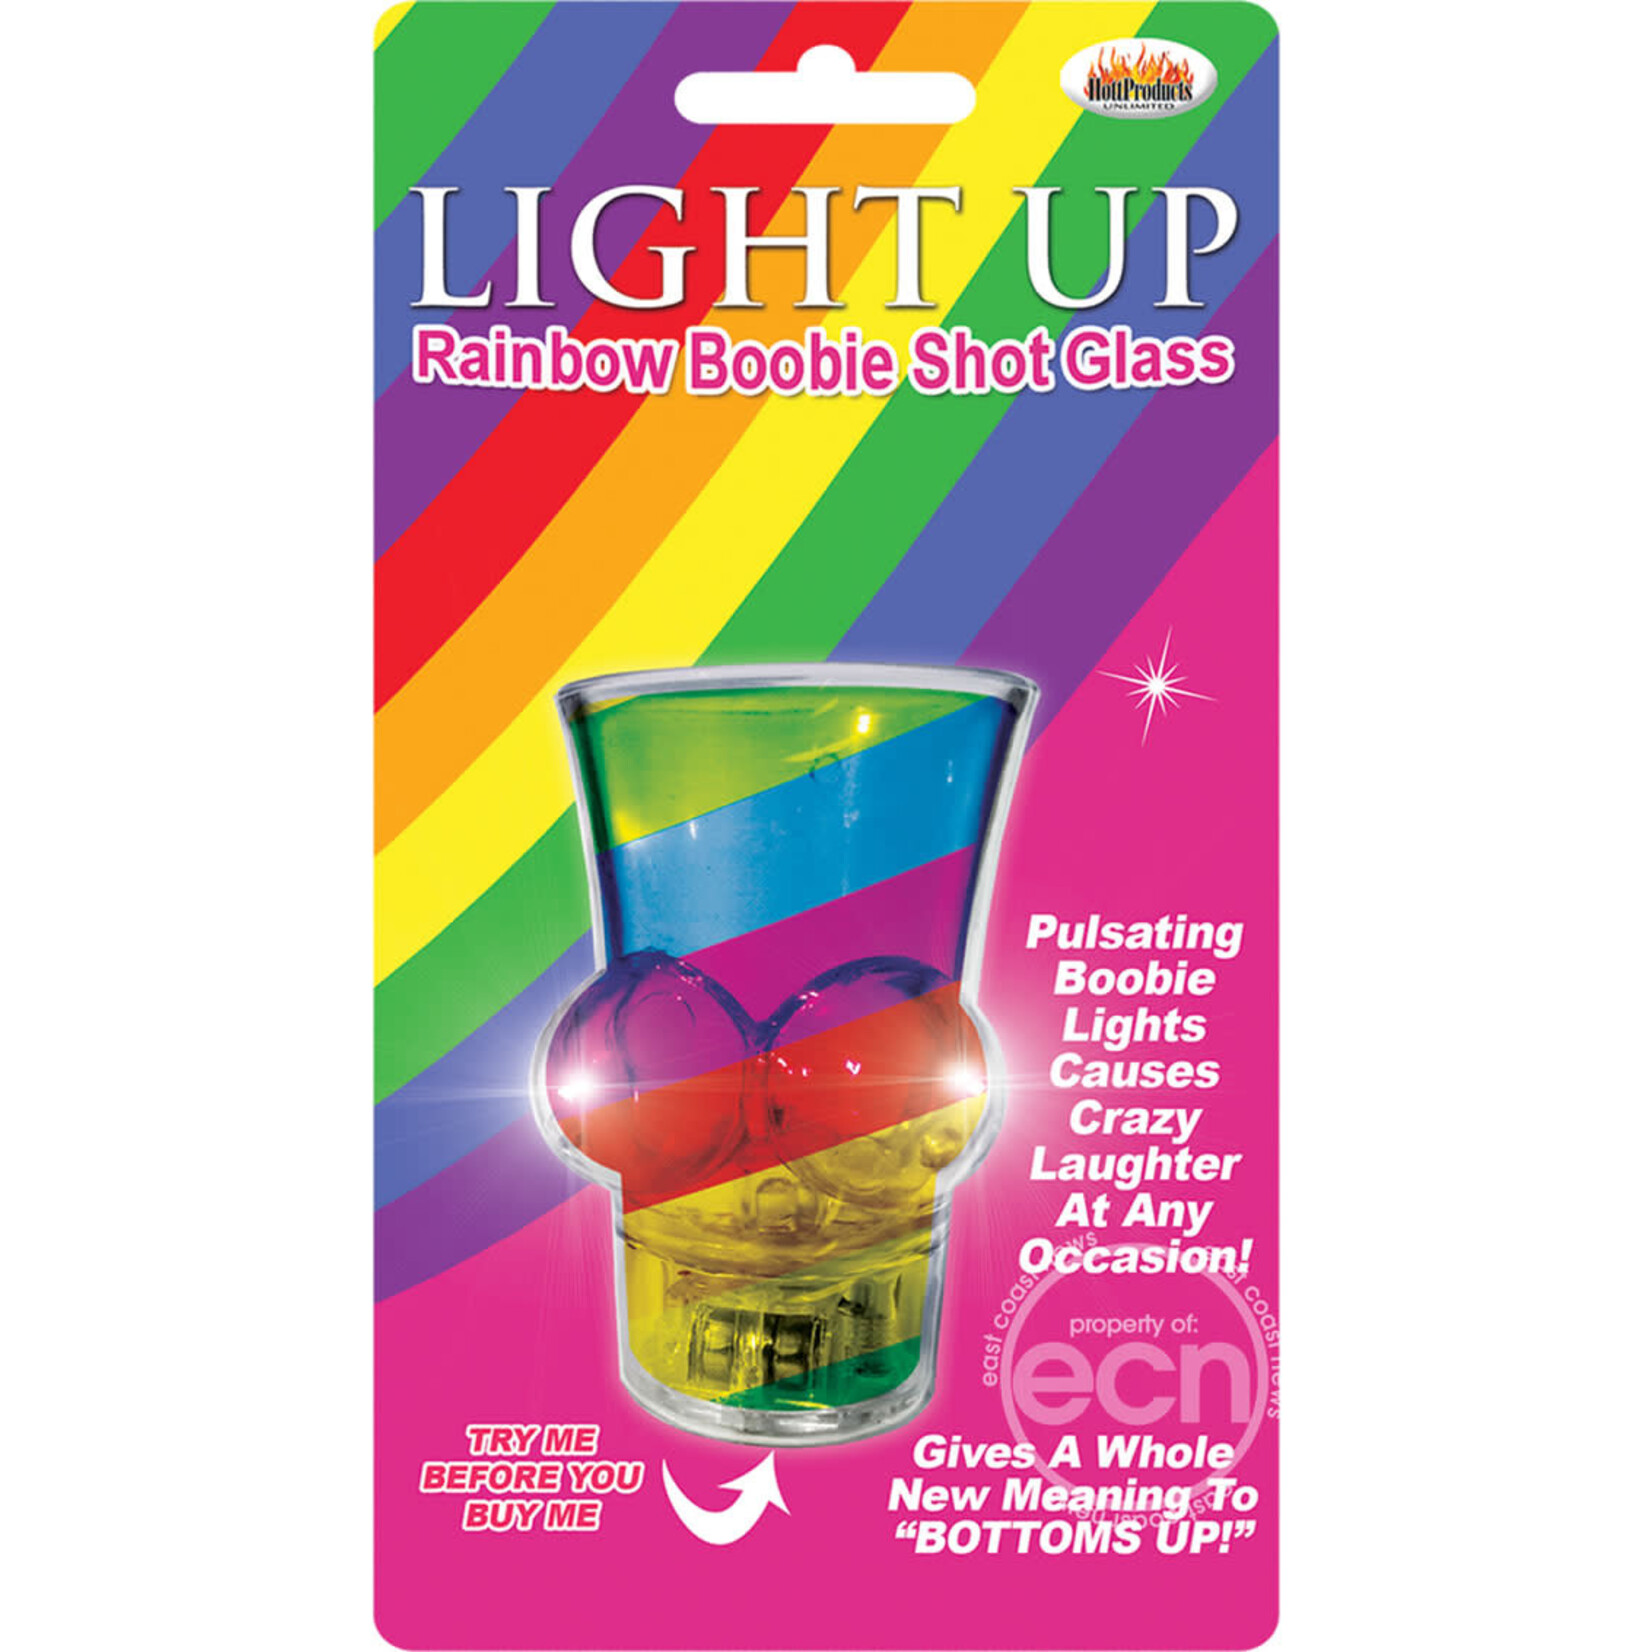 Hott Products Light Up Rainbow Boobie Shot Glass Multi-Color